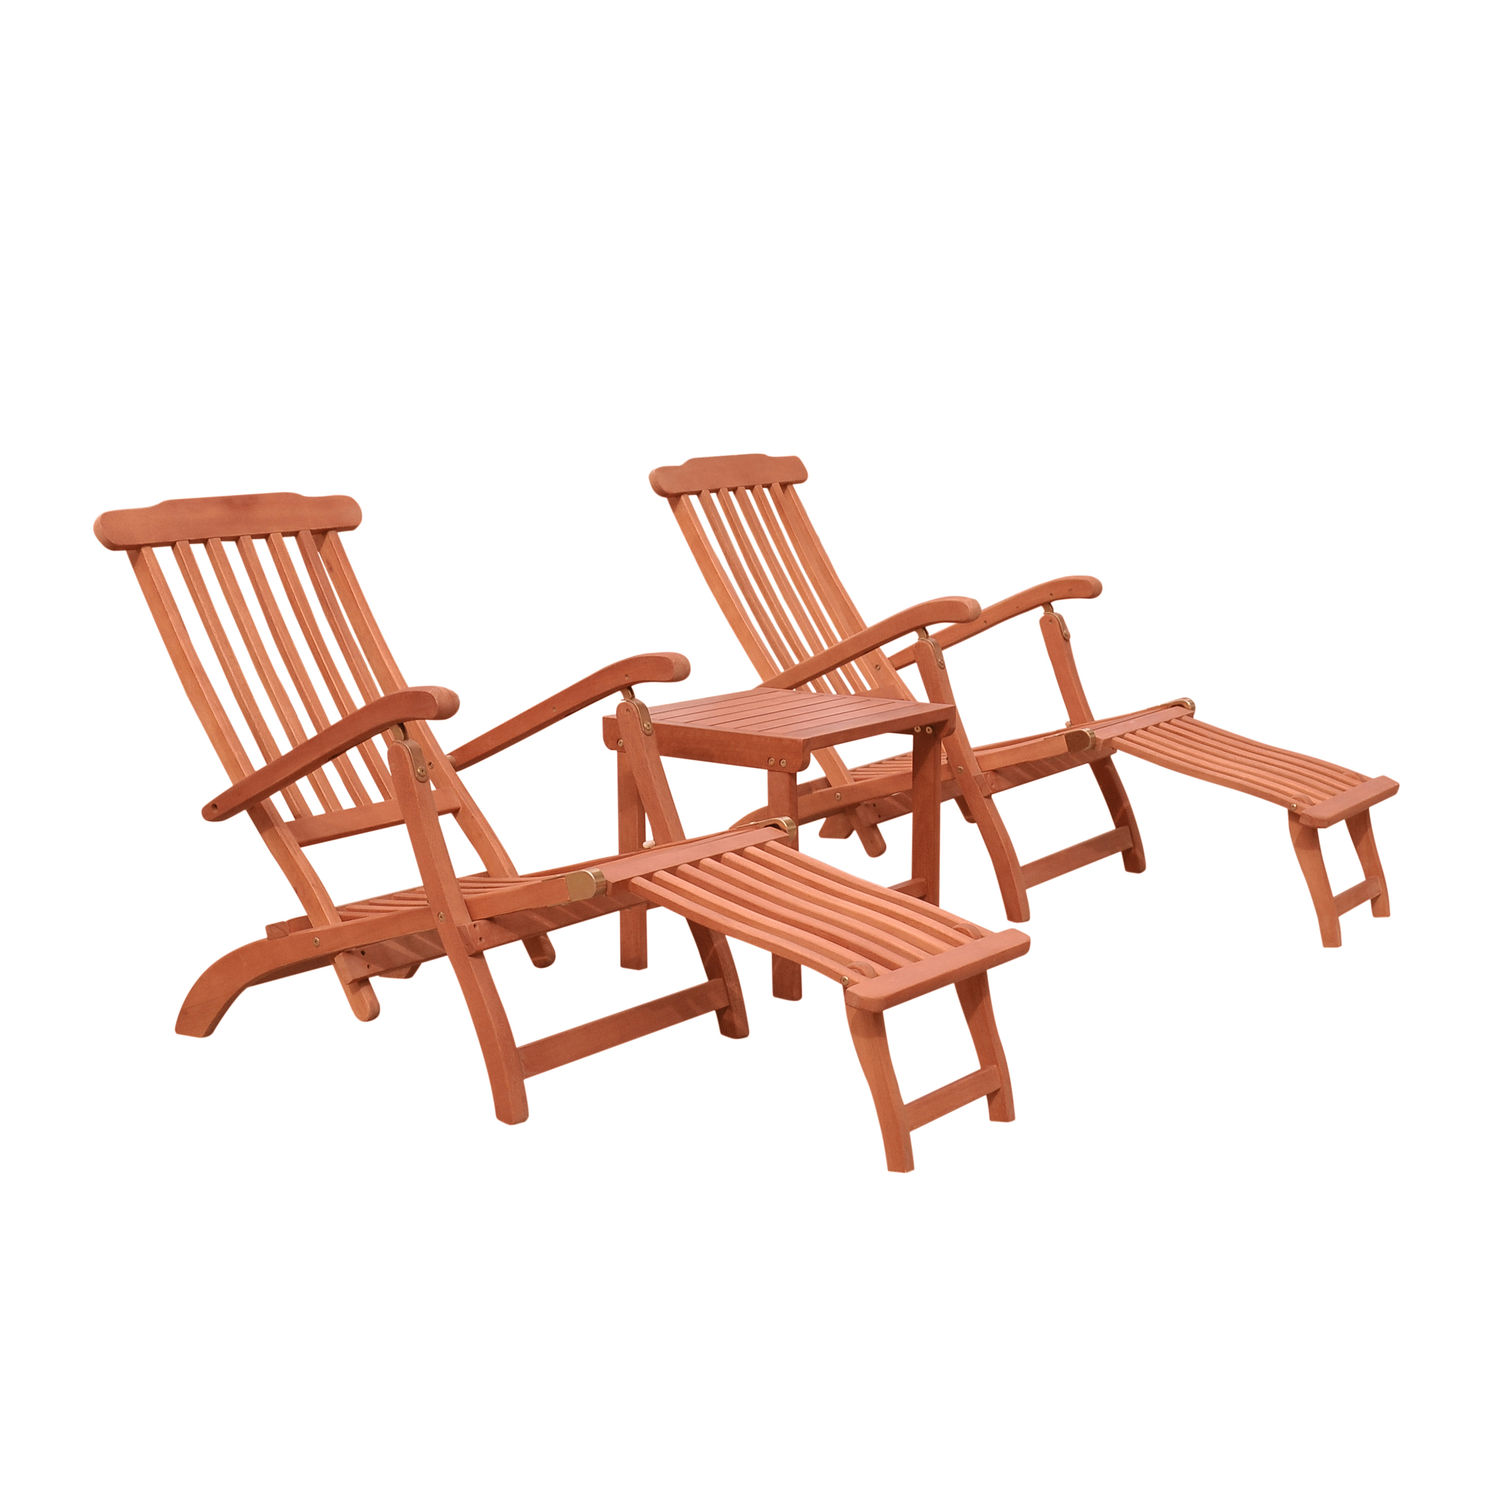 Malibu Wood Outdoor Patio 3-Piece Chaise Lounge Set